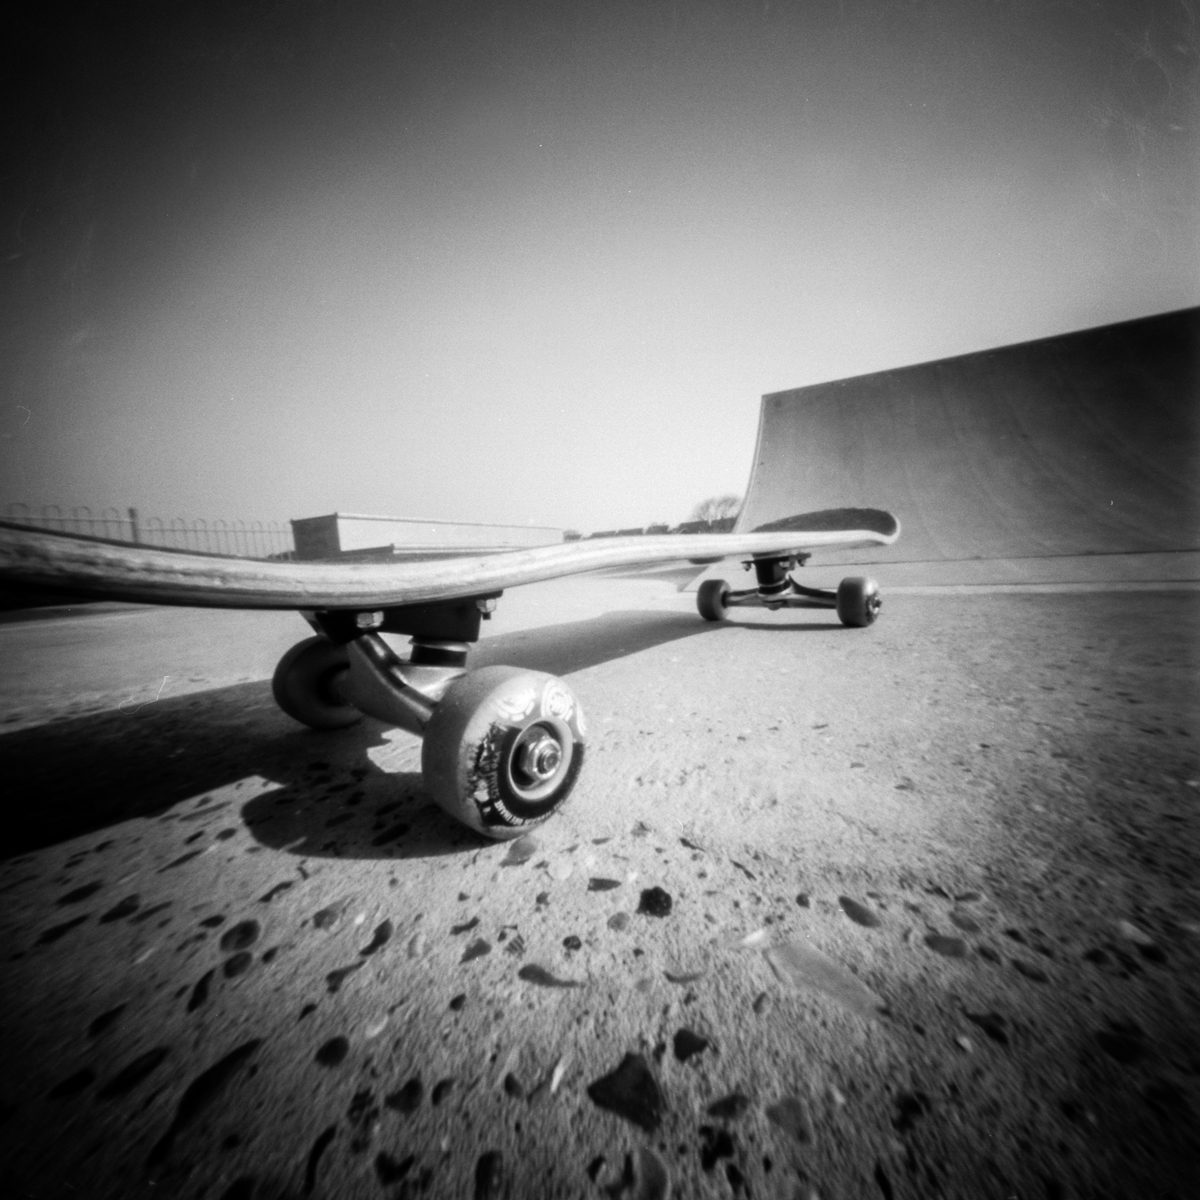 Image of a skateboard